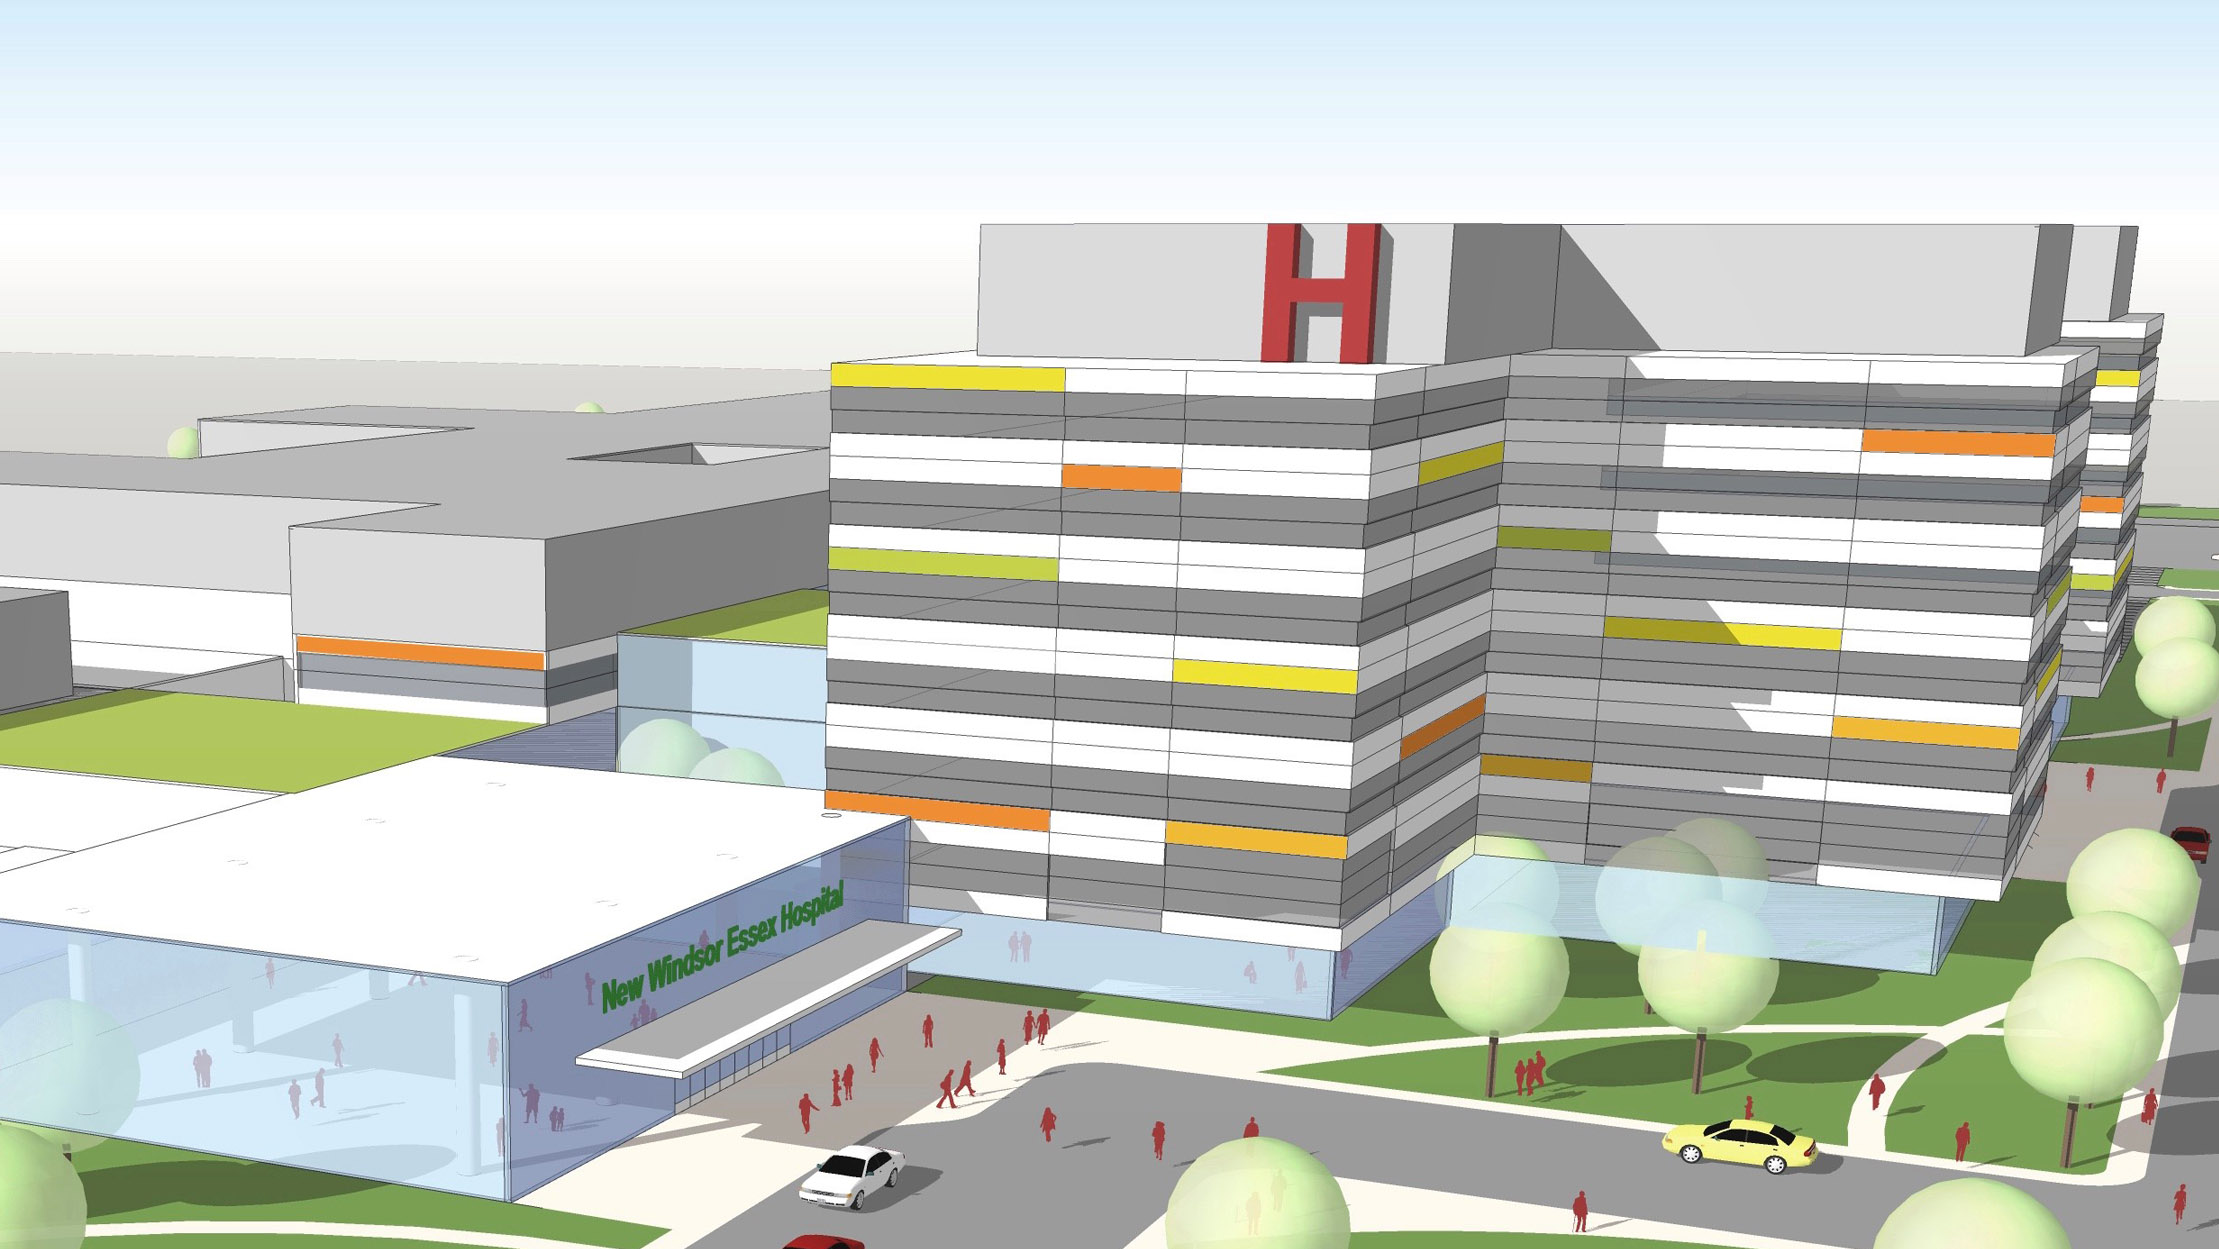 New hospital